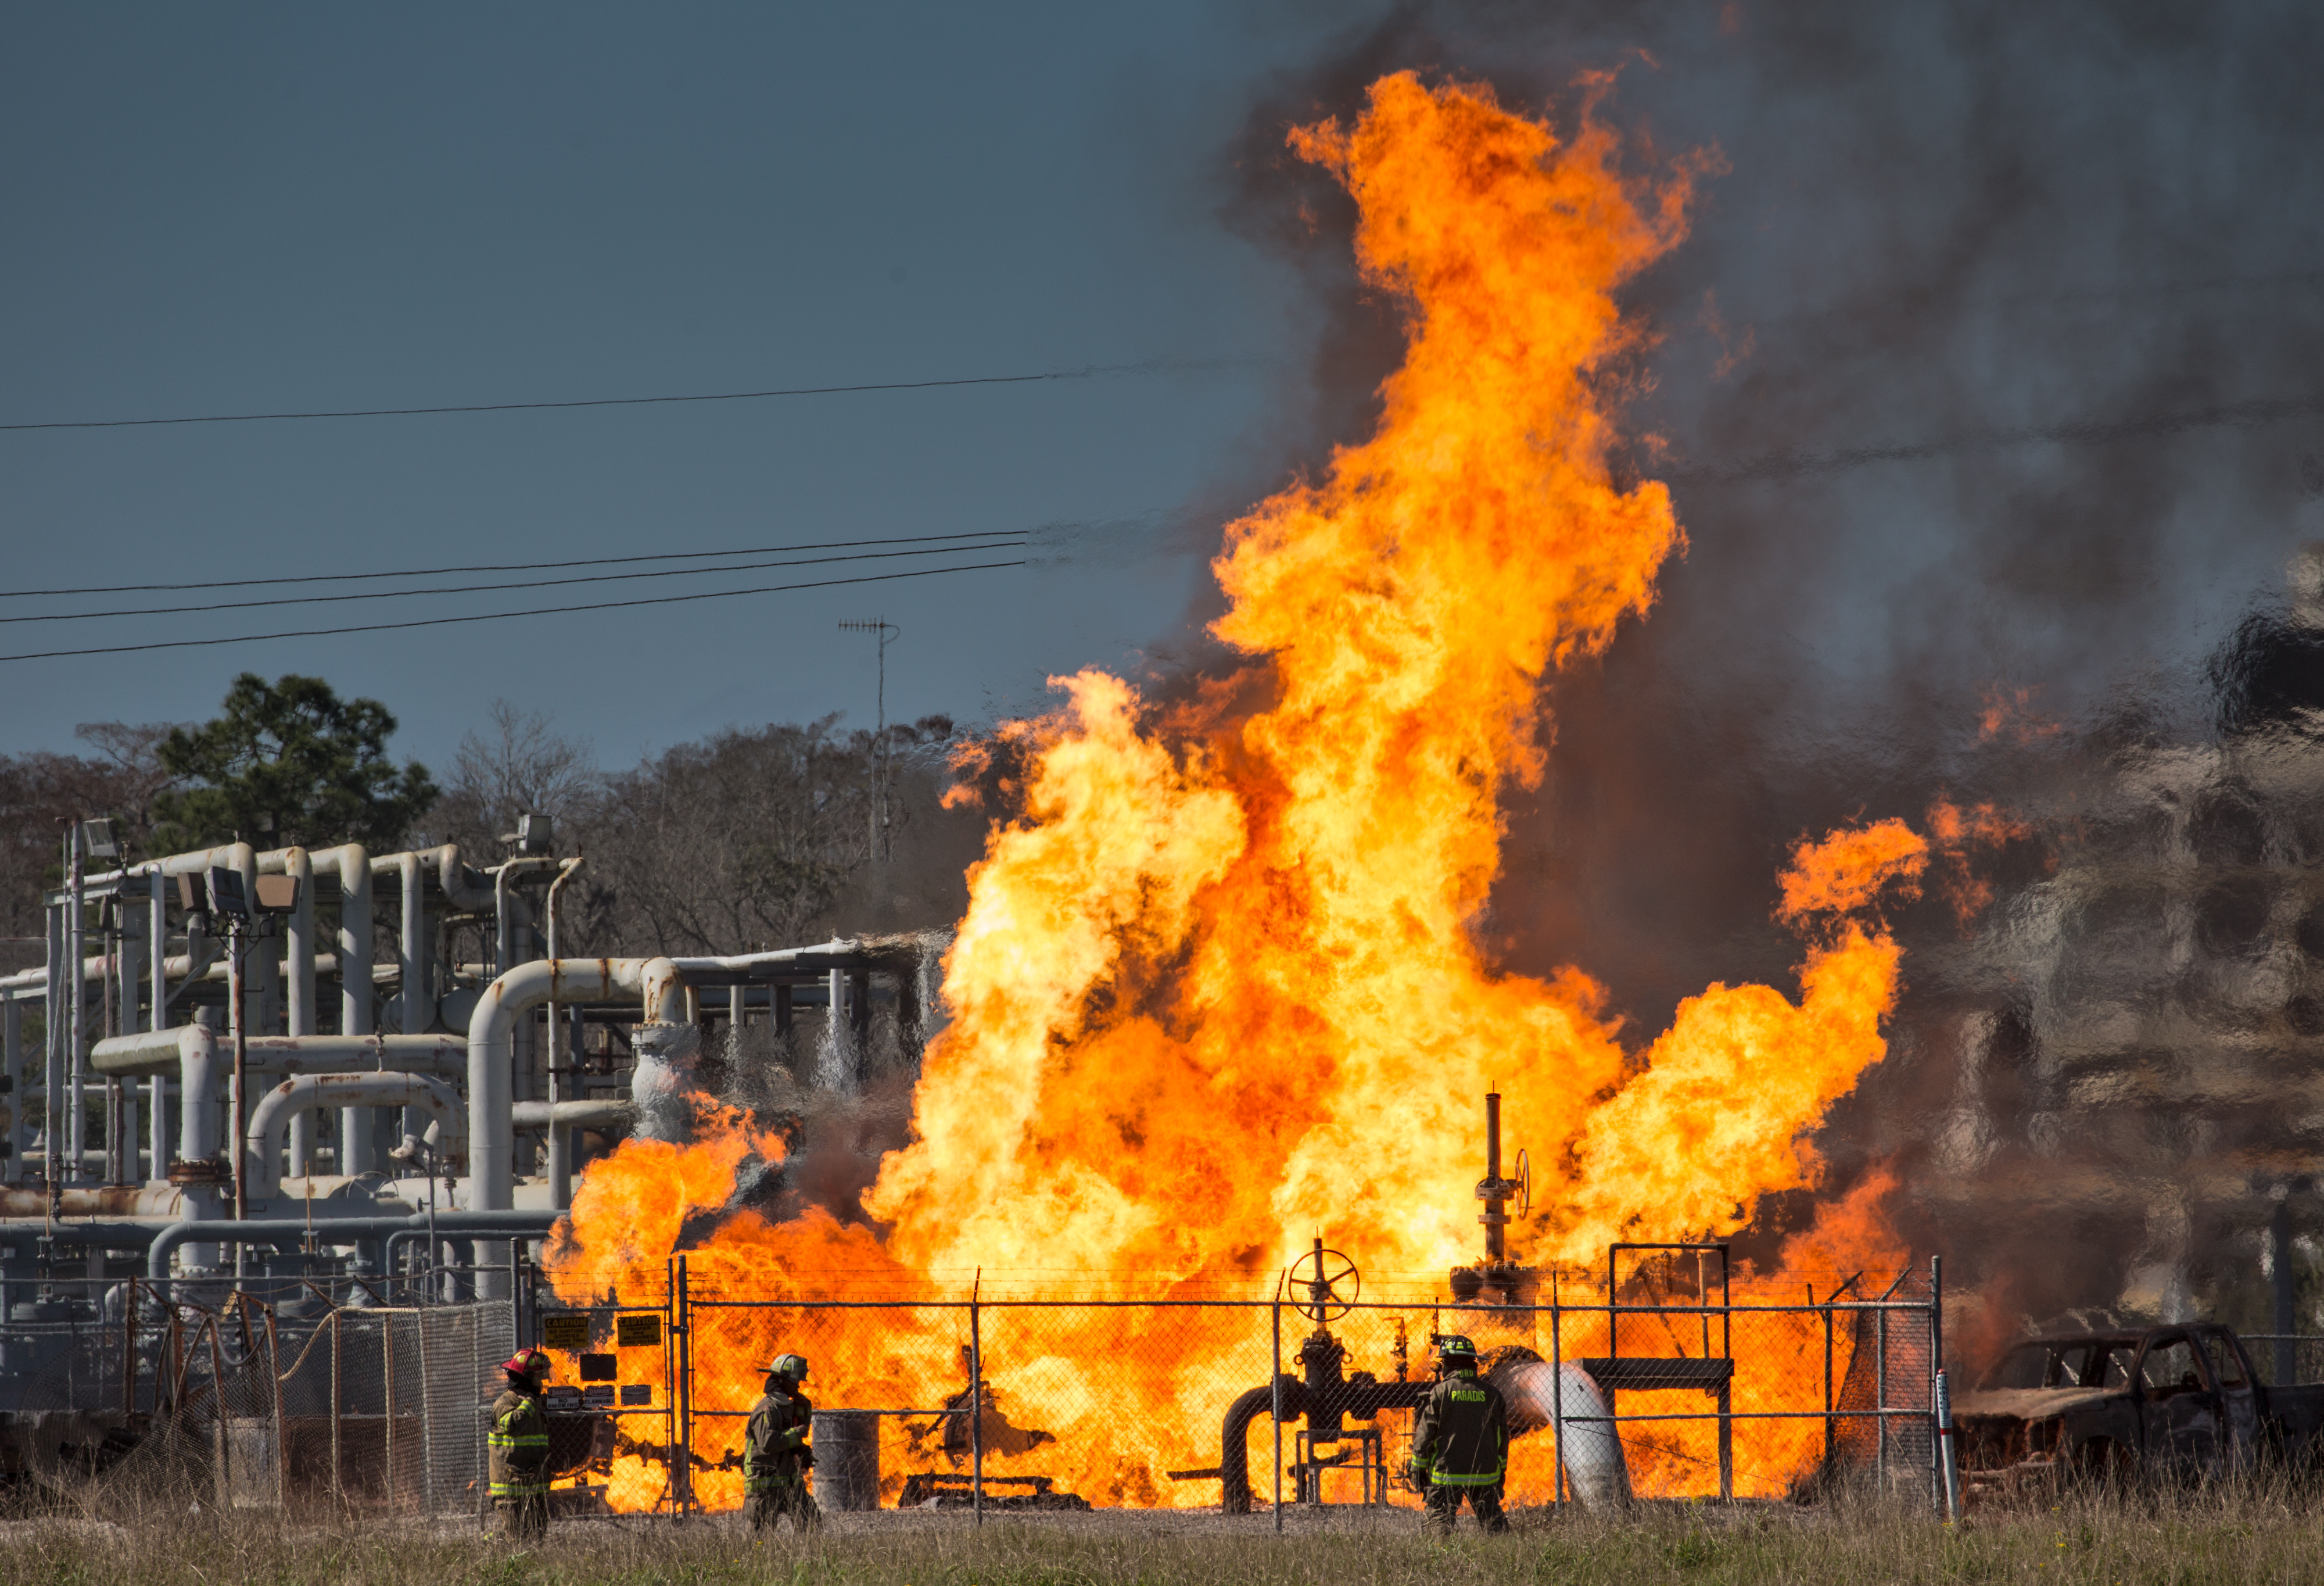 Phillips 66 Pipeline Explosion in Paradis, Louisiana - Photography Julie Dermansky